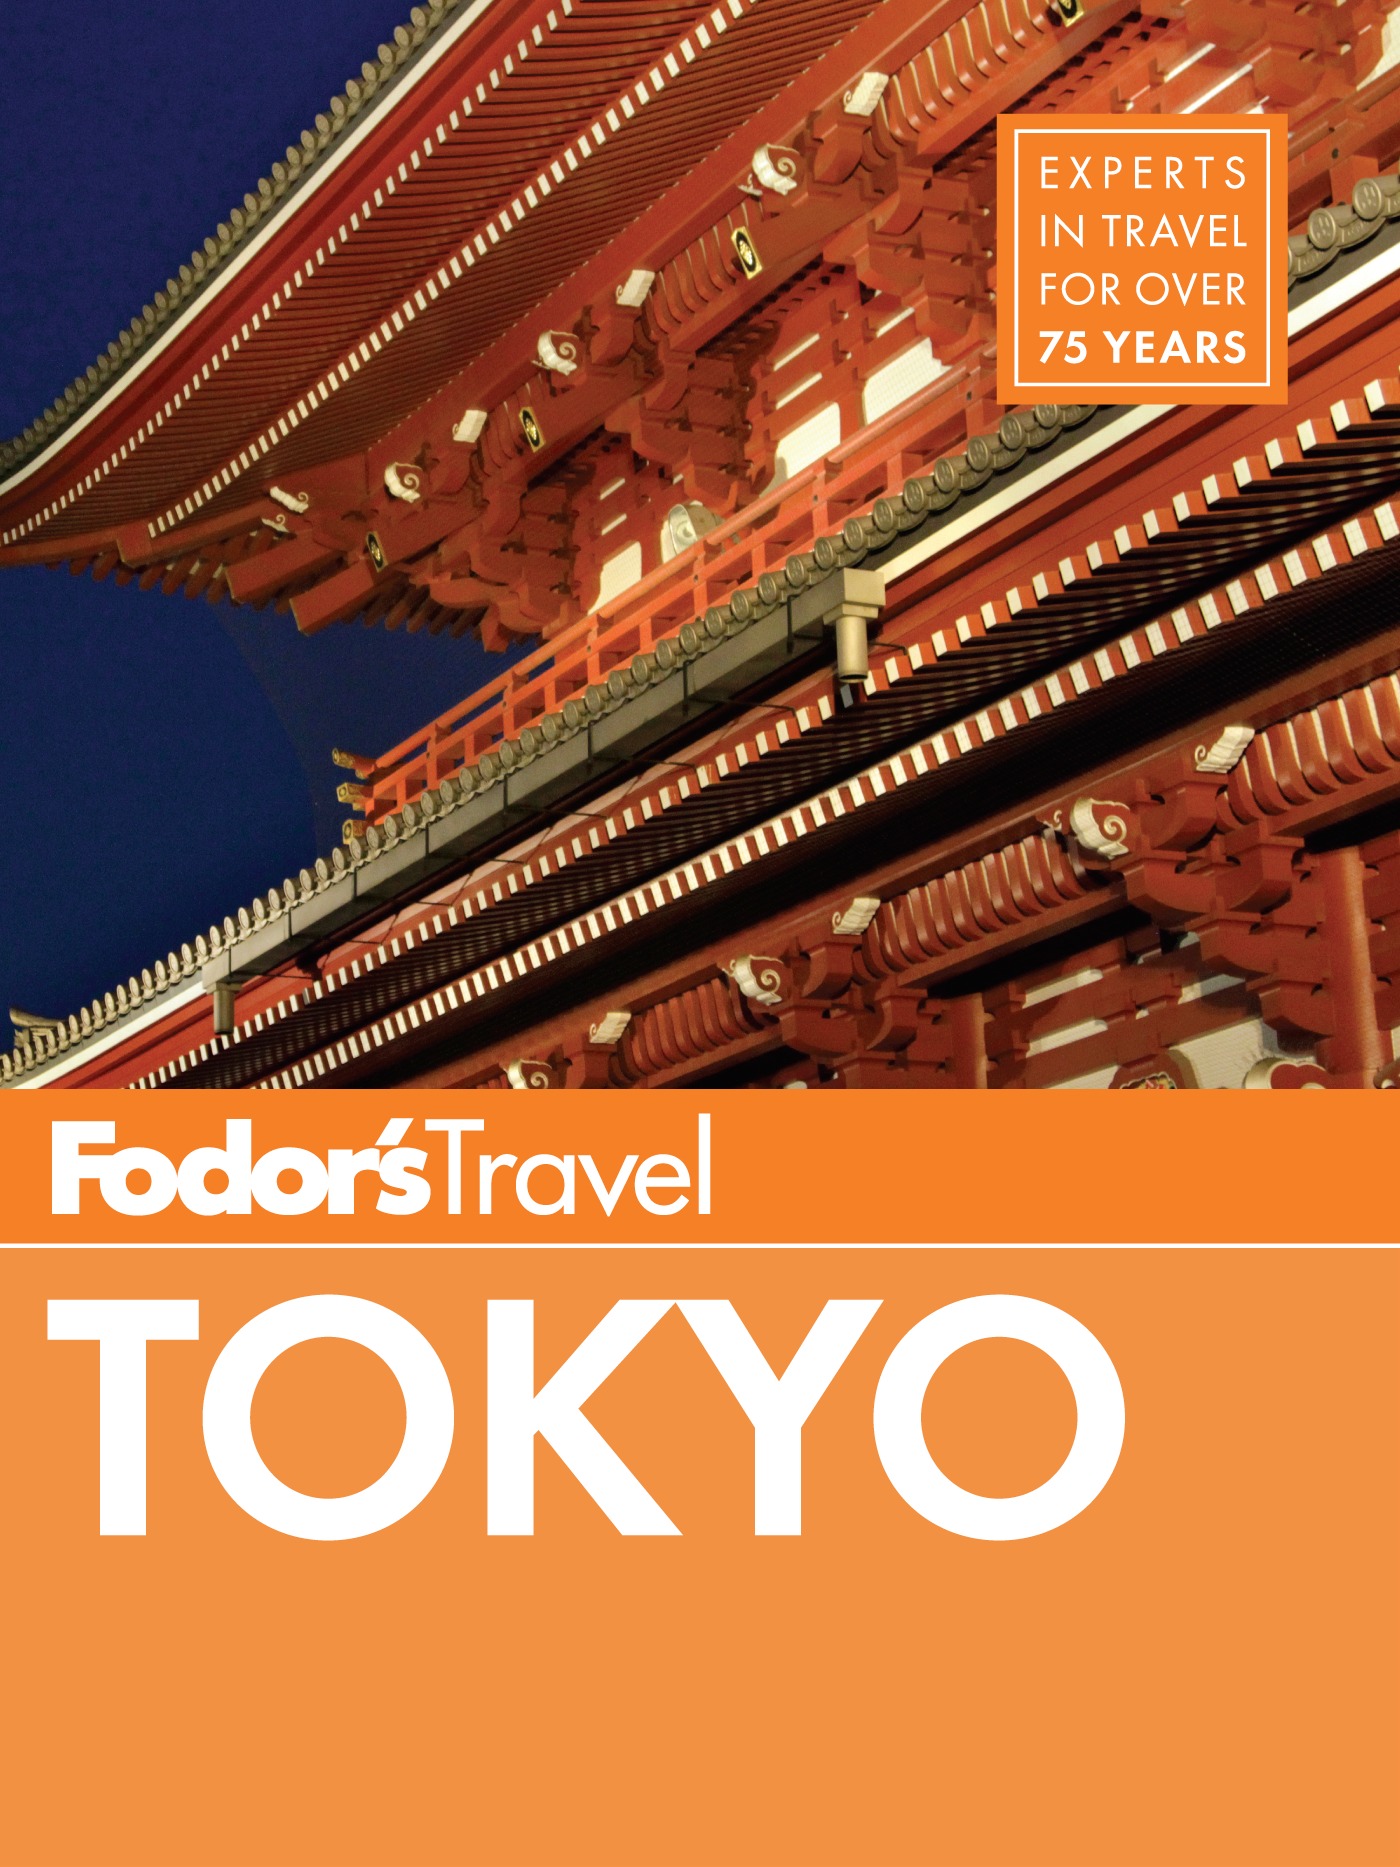 Fodor's Tokyo cover image